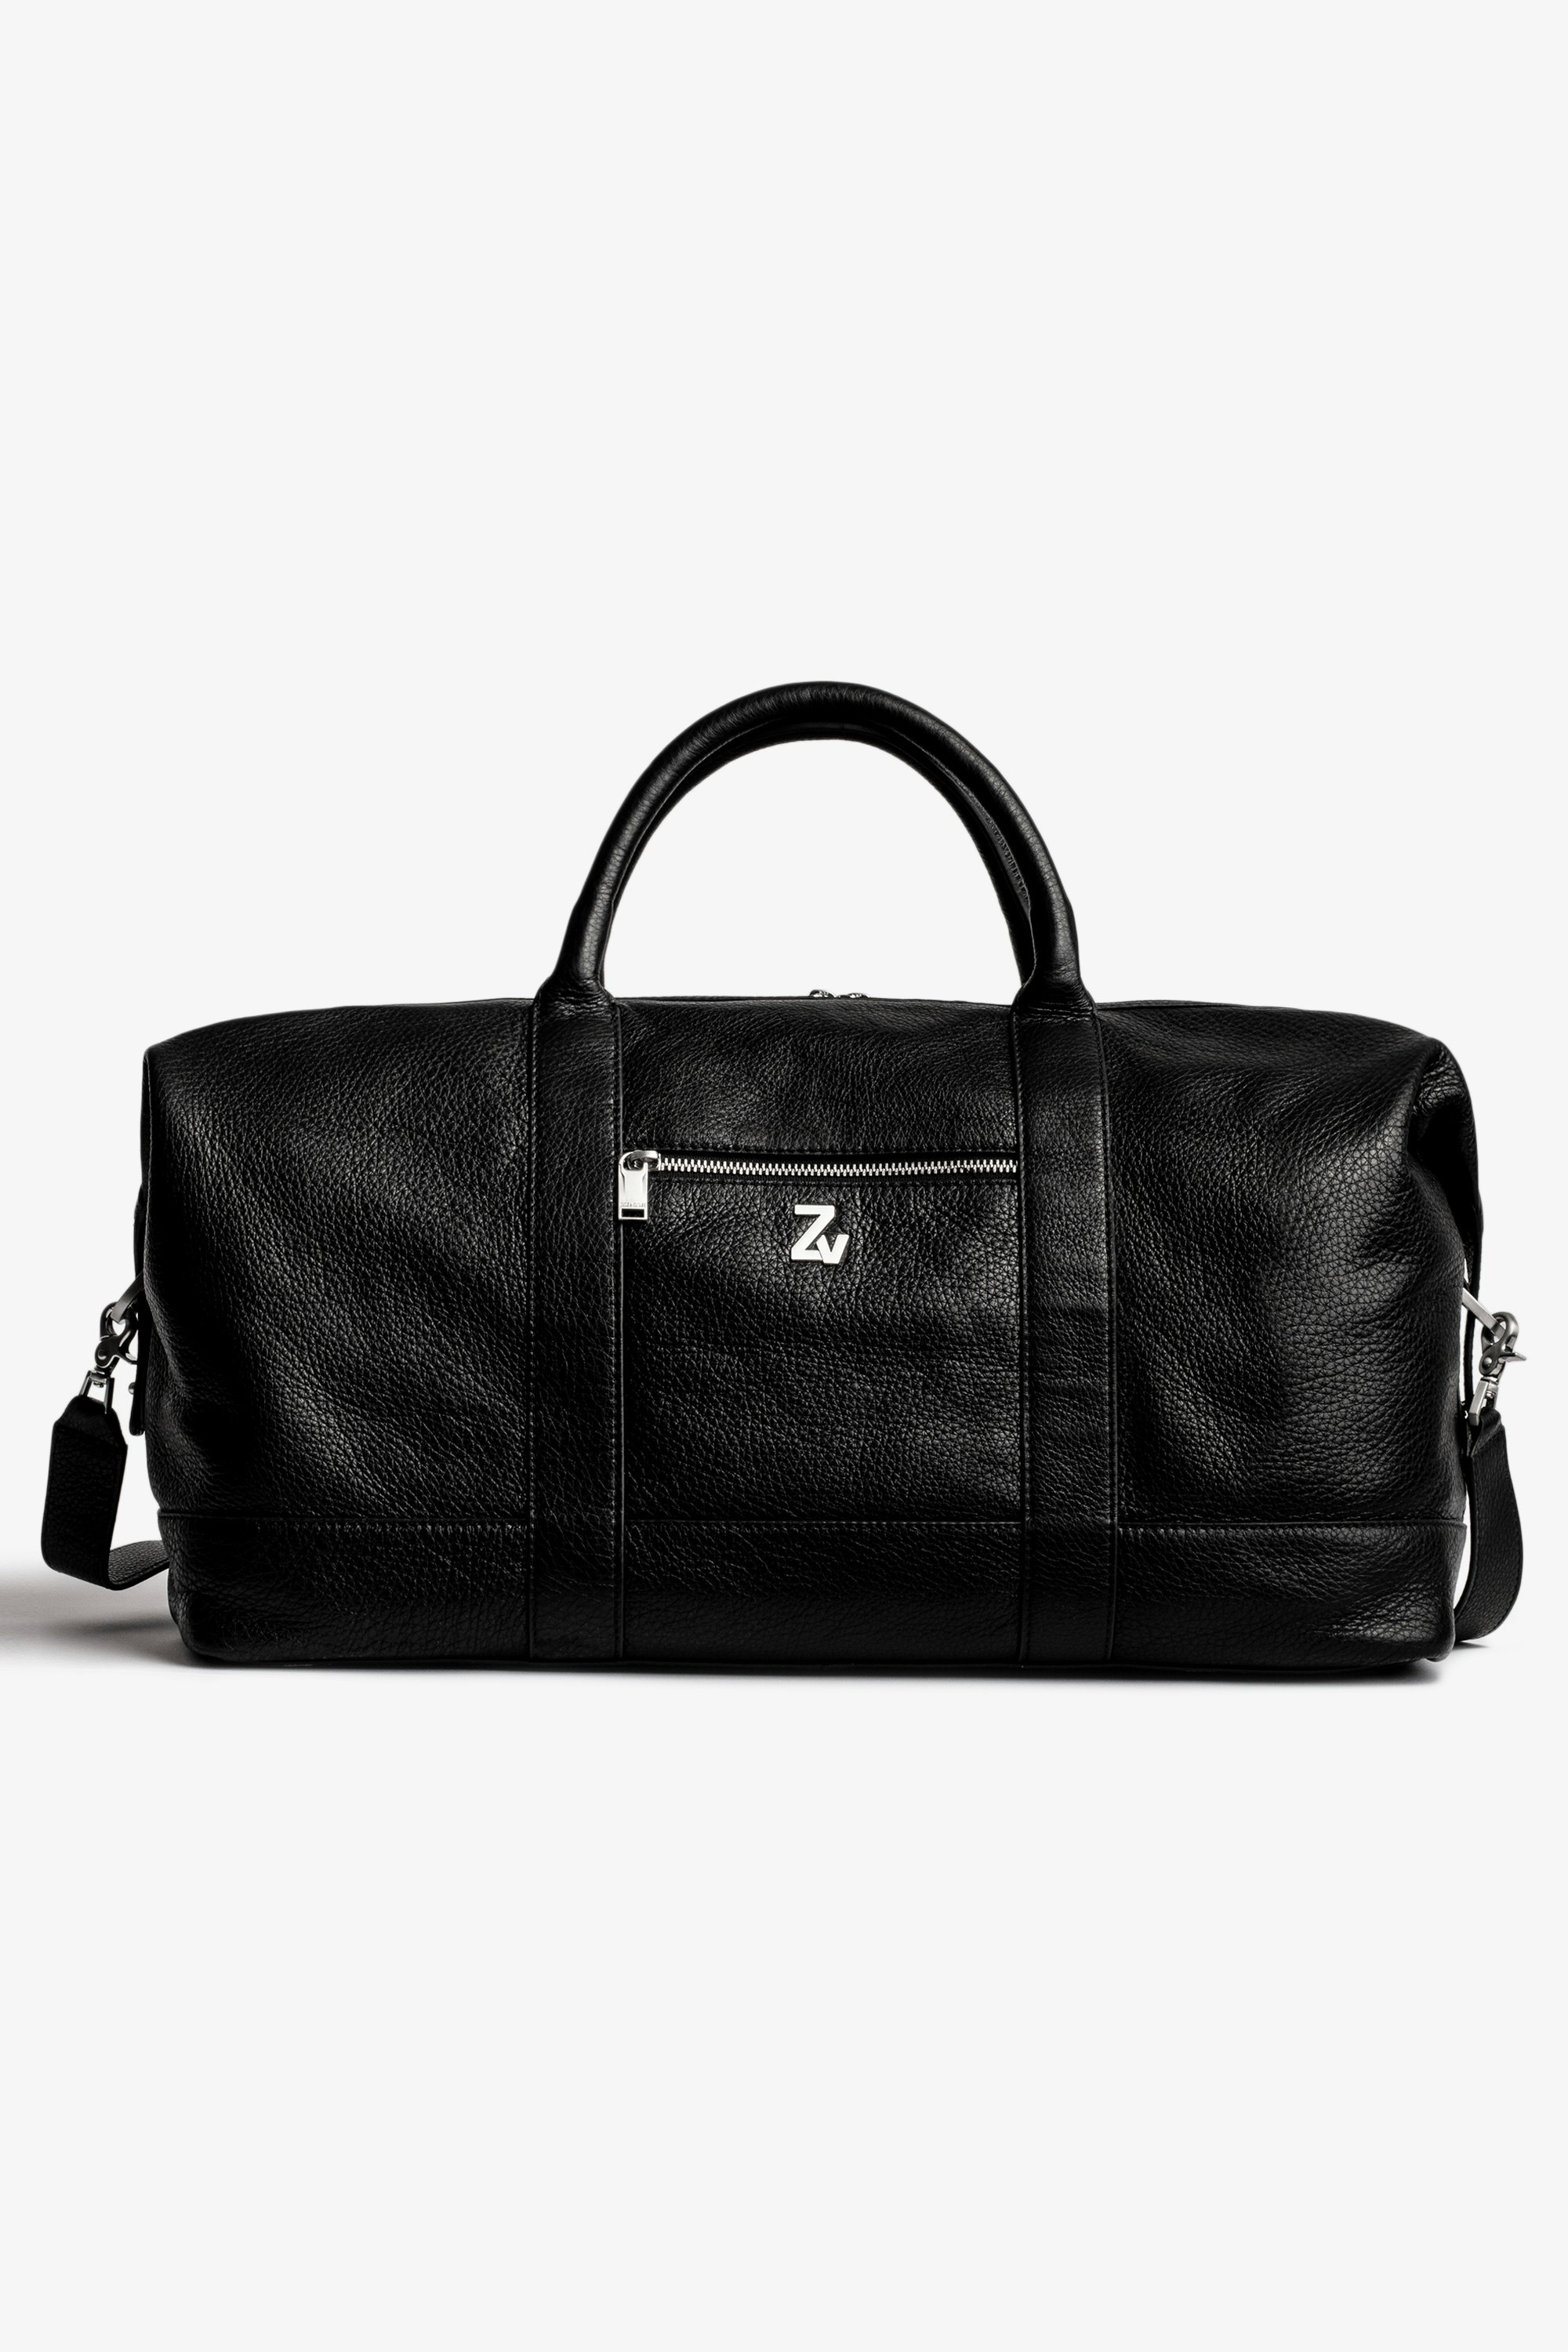 ZV Initiale Jamie Bag Men's black grained leather bag